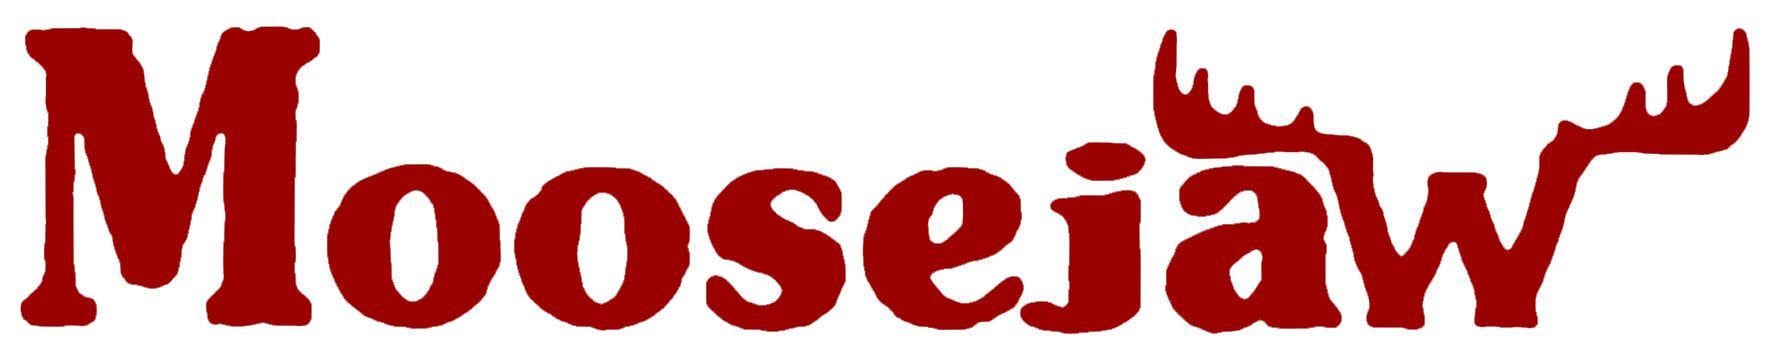 Moose Jaw Logo - MOOSEJAW LOGO RED - Yottaa